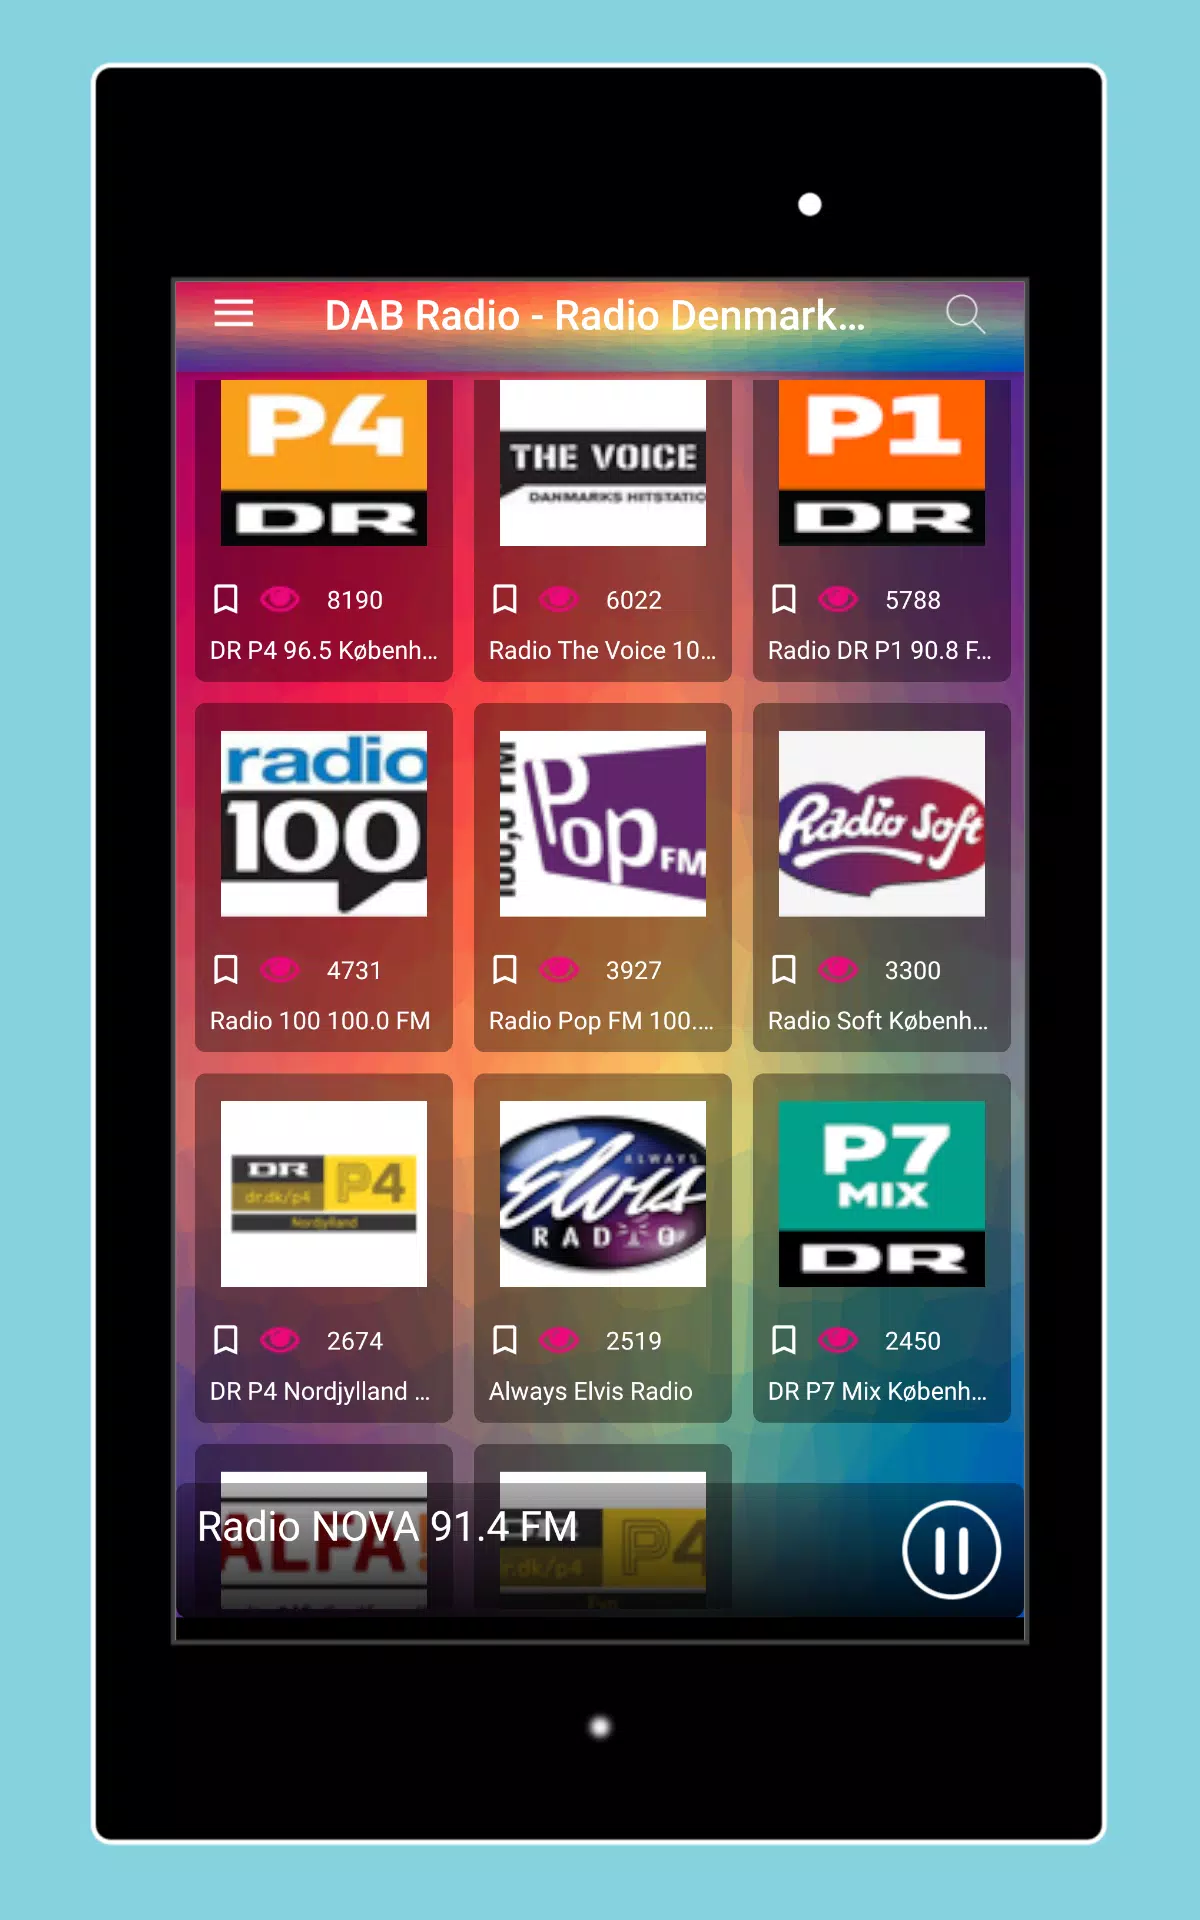 Radio Denmark - DAB Radio + Danish Radio Stations for Android - APK Download